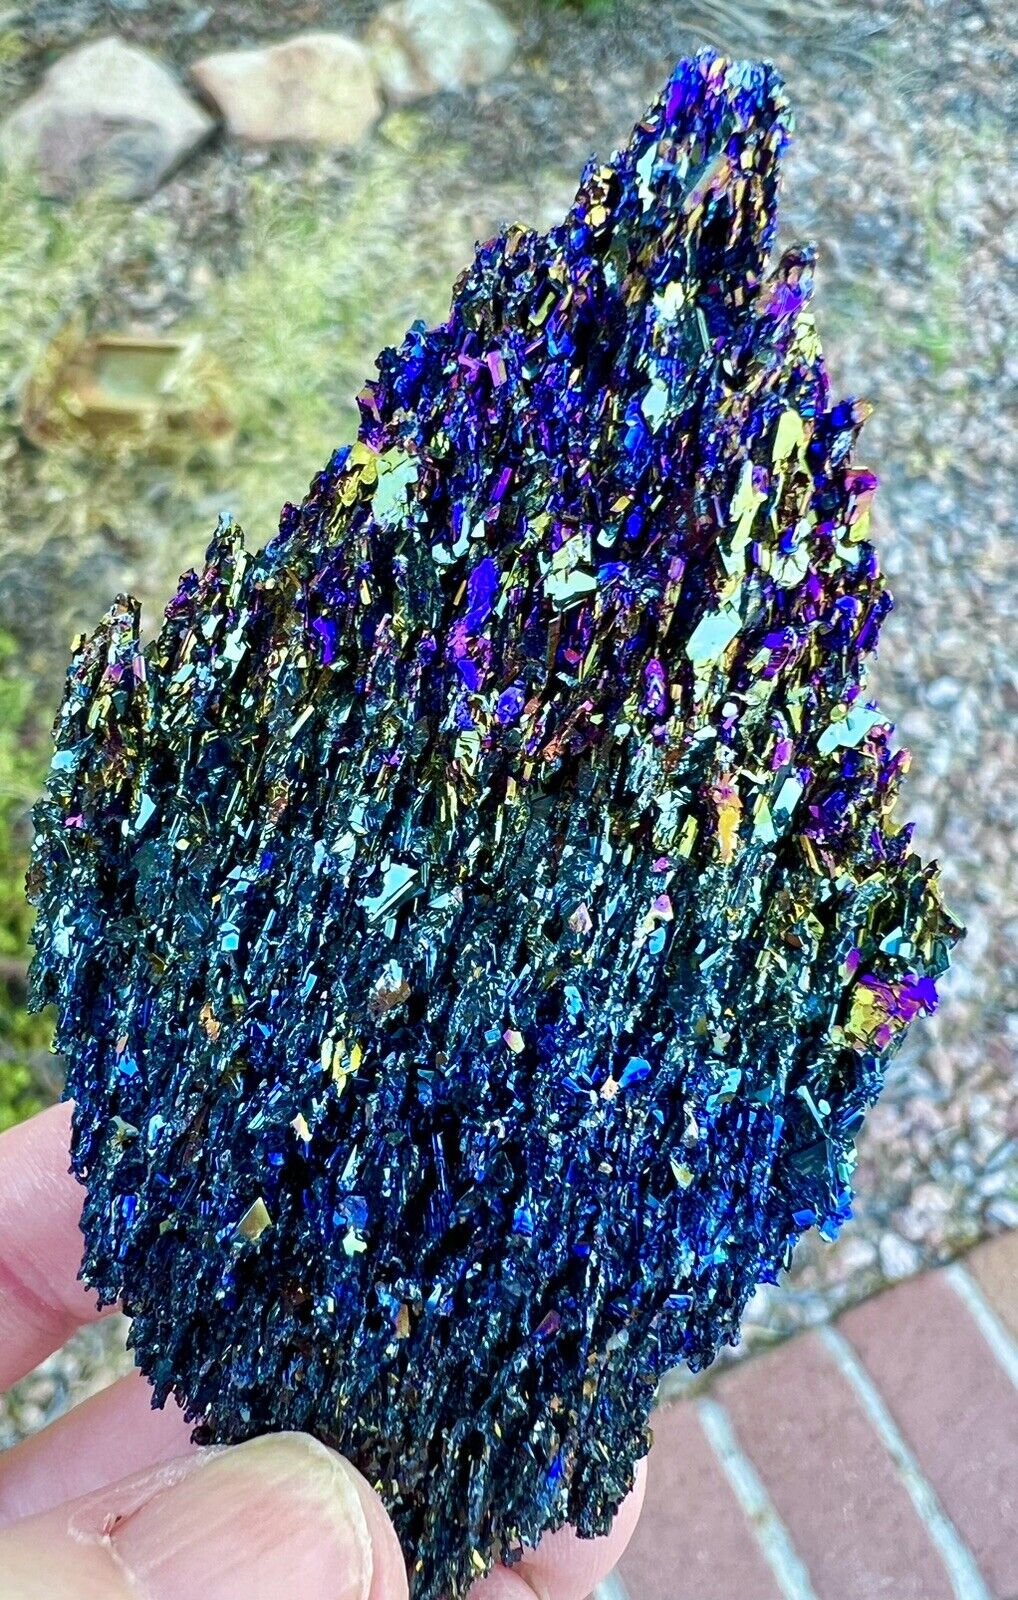 Rainbow Iridescent Metallic Moissanite Crystal Cluster Mineral Specimen Healing